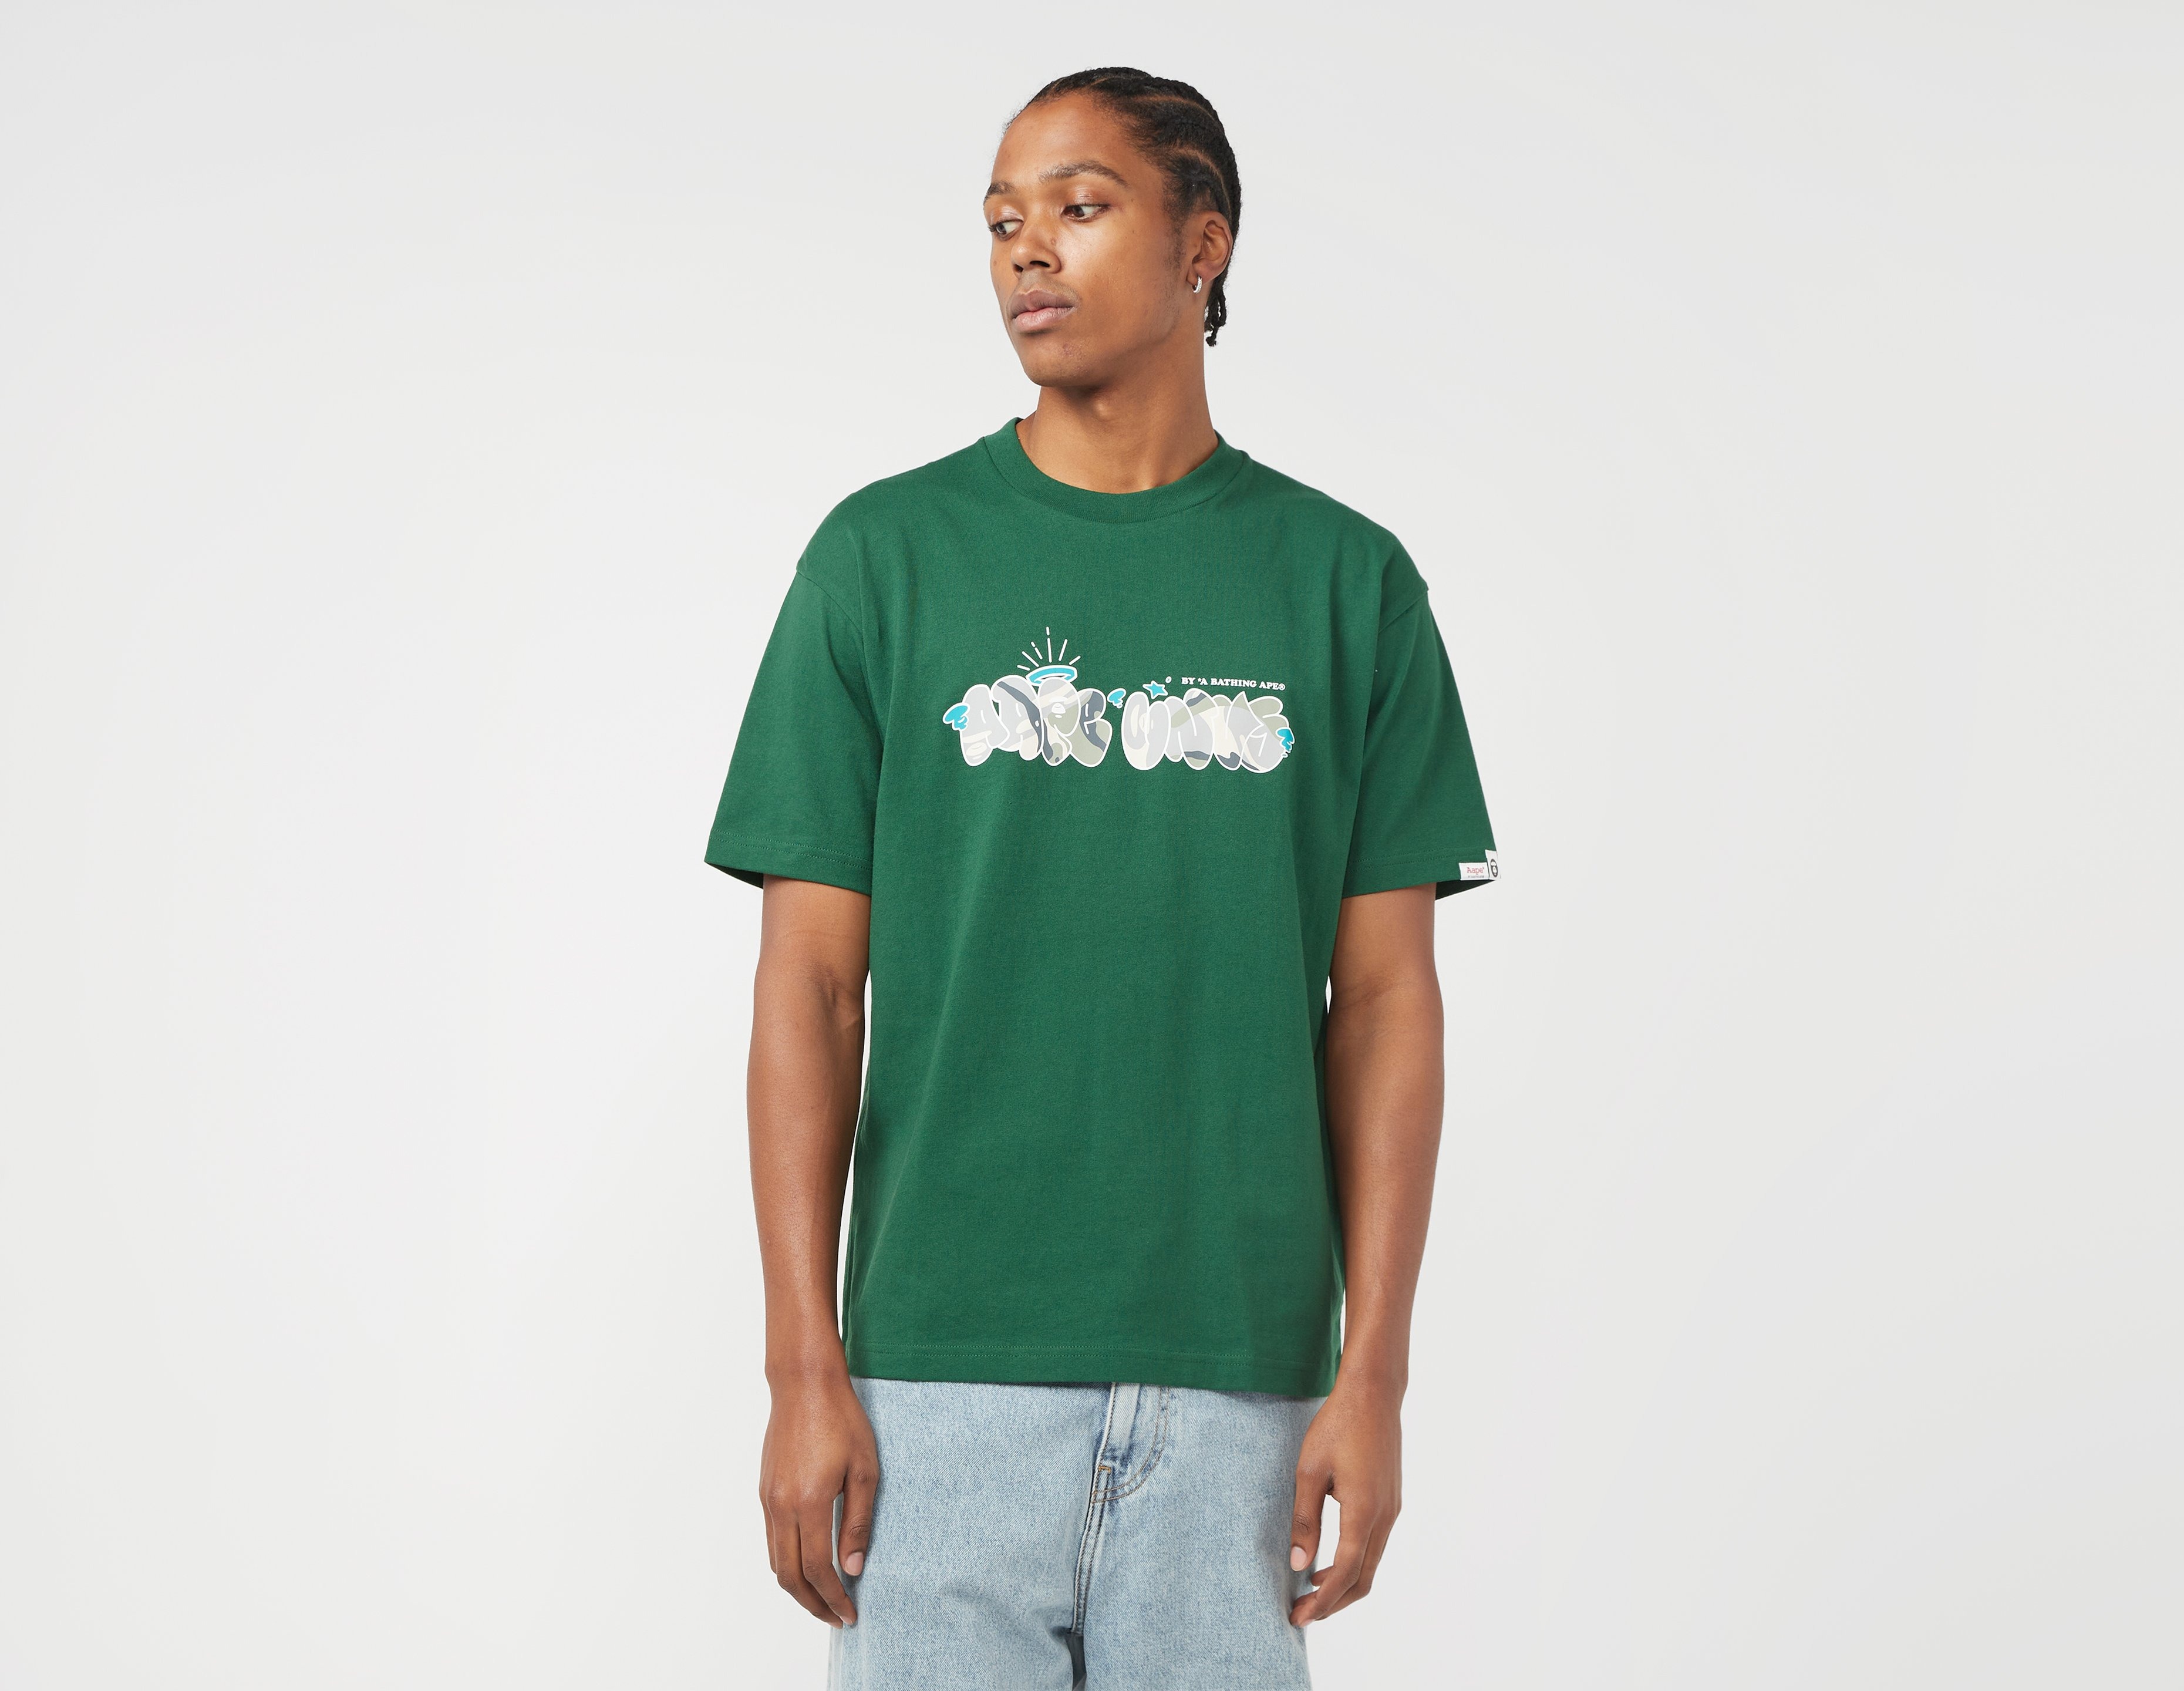 A Gore By azulado - Logo Wear Green Healthdesign? | Stamp Ape Bathing R7 verde Shirt fluo - amarelo T AAPE T-shirt